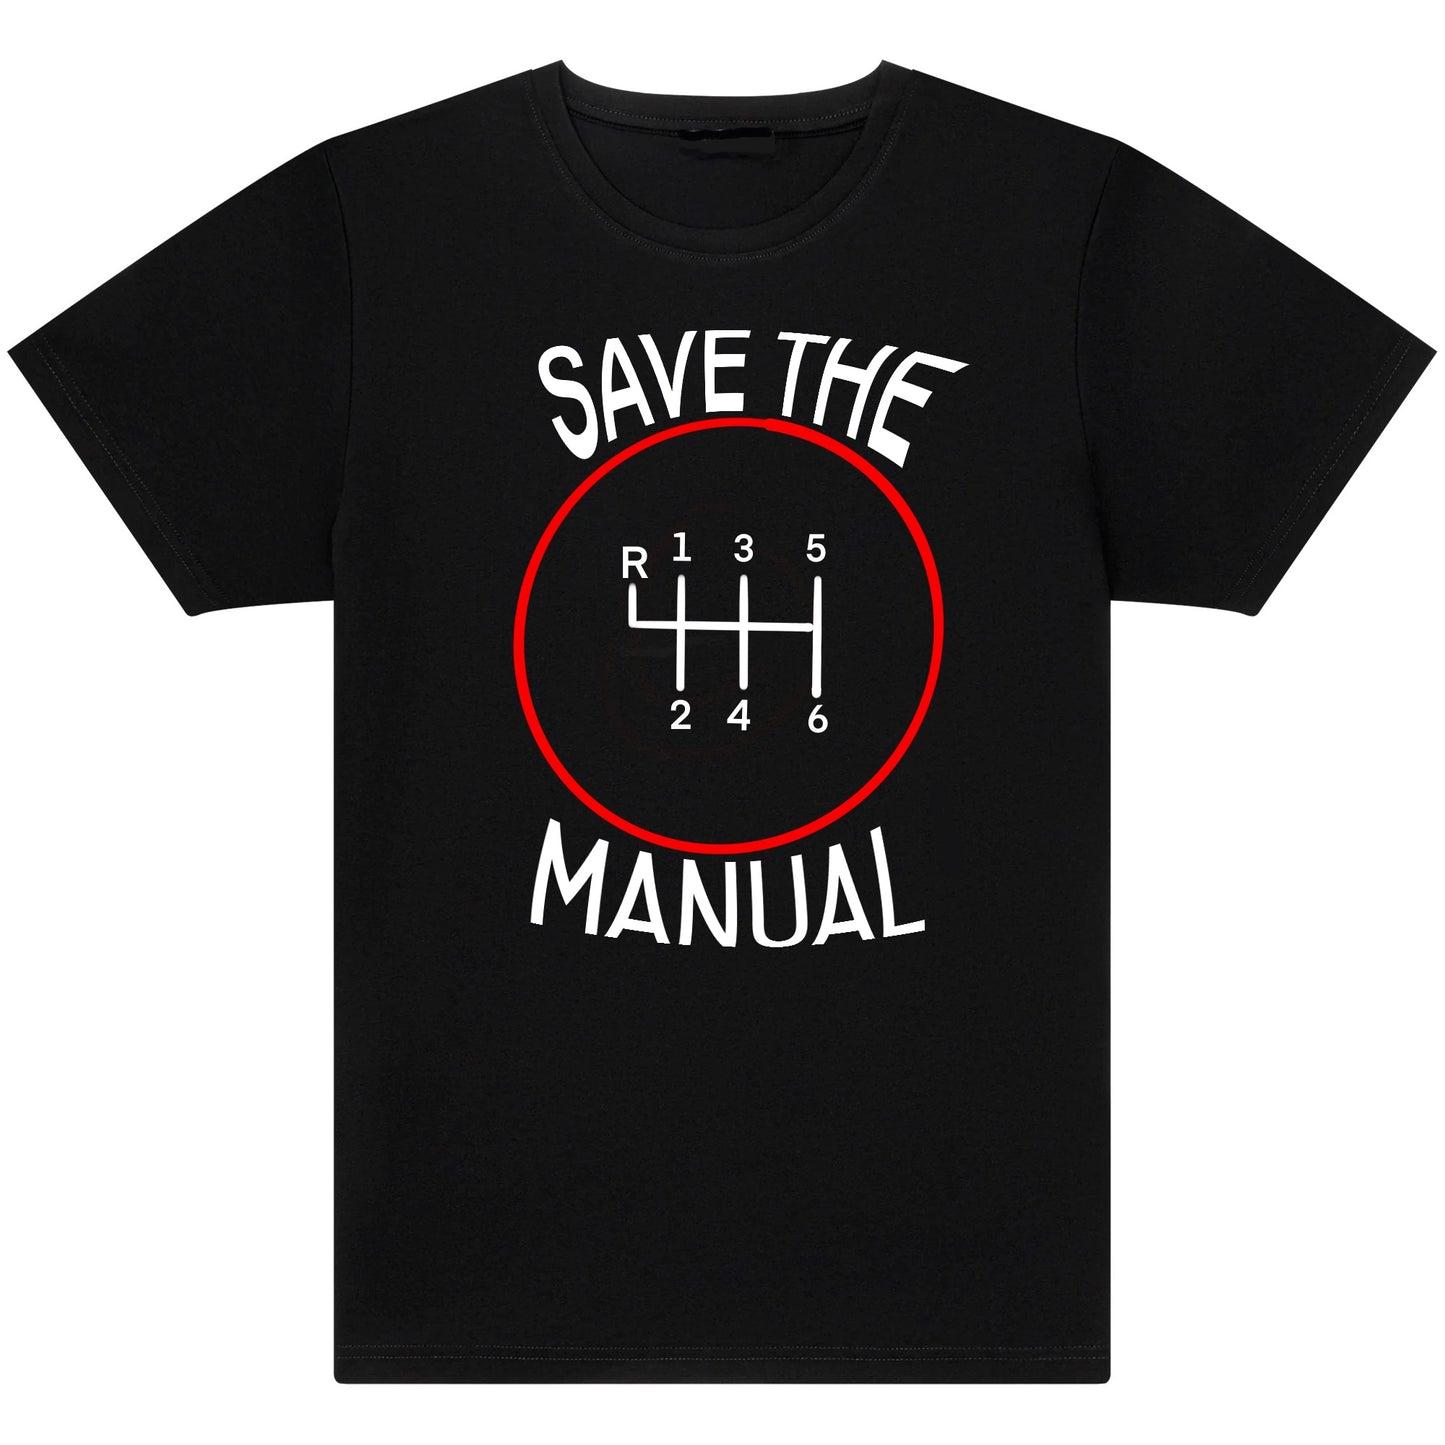 Save the Manual T-shirt